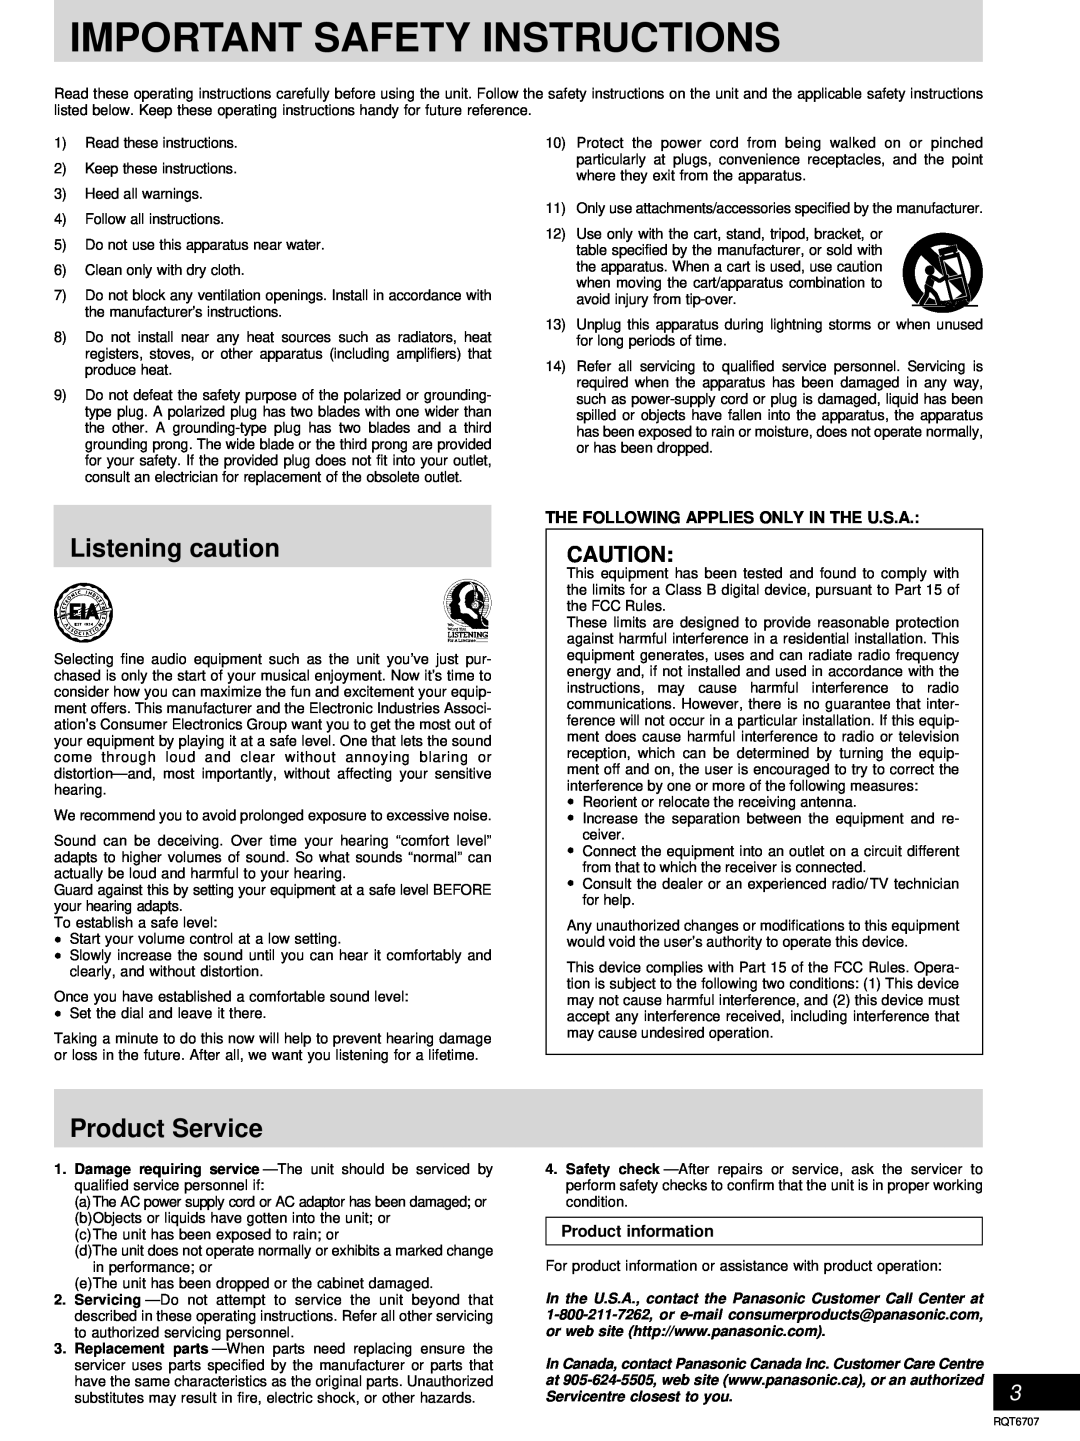 Panasonic SC-AK510, SC-AK410 manual Listening caution, Product Service, Important Safety Instructions 